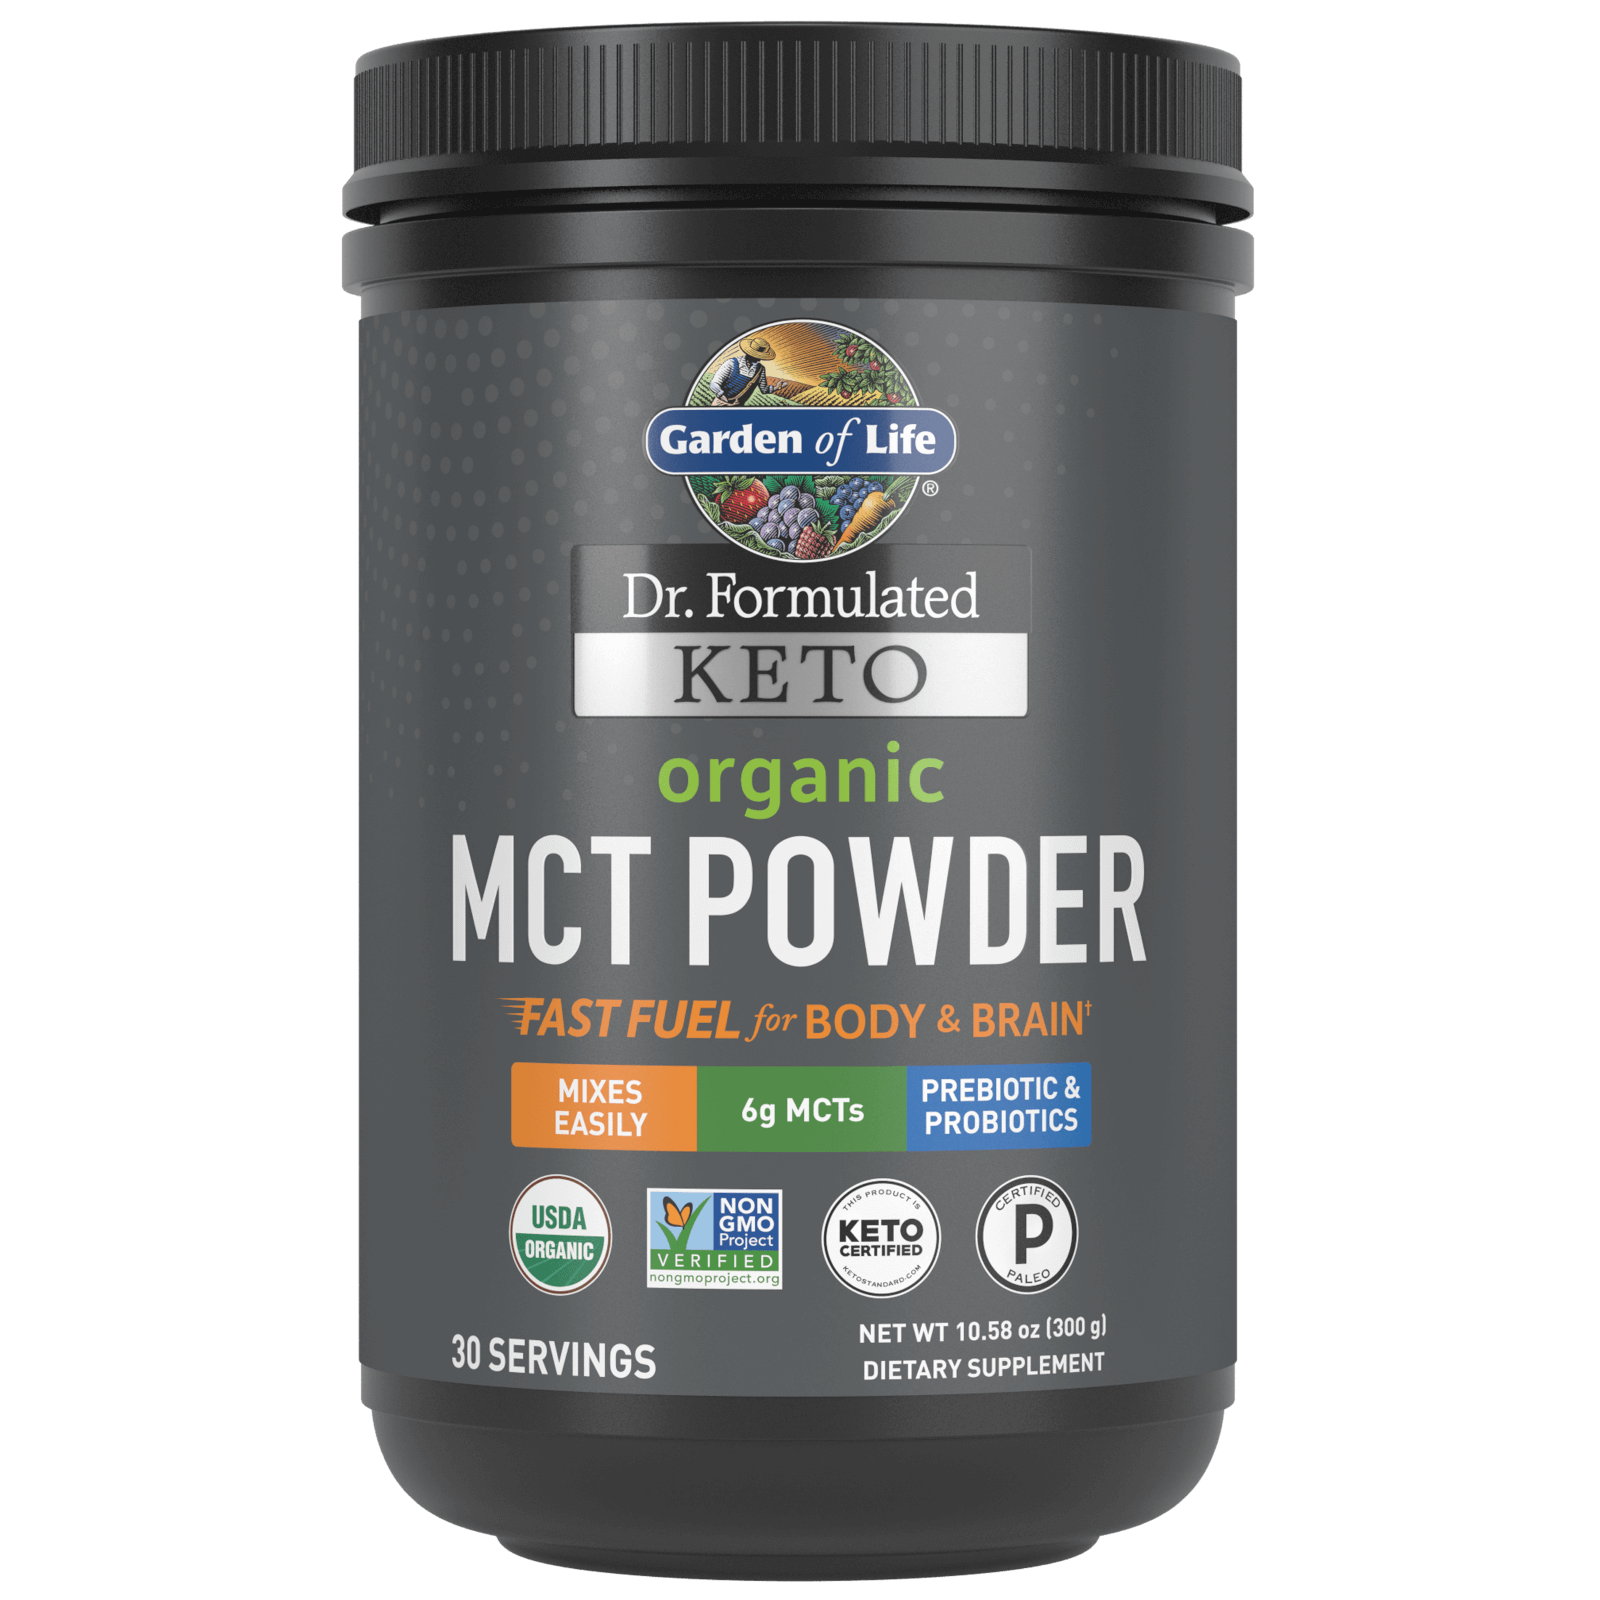 Garden of Life Keto Organic Mct Powder 300g Powder